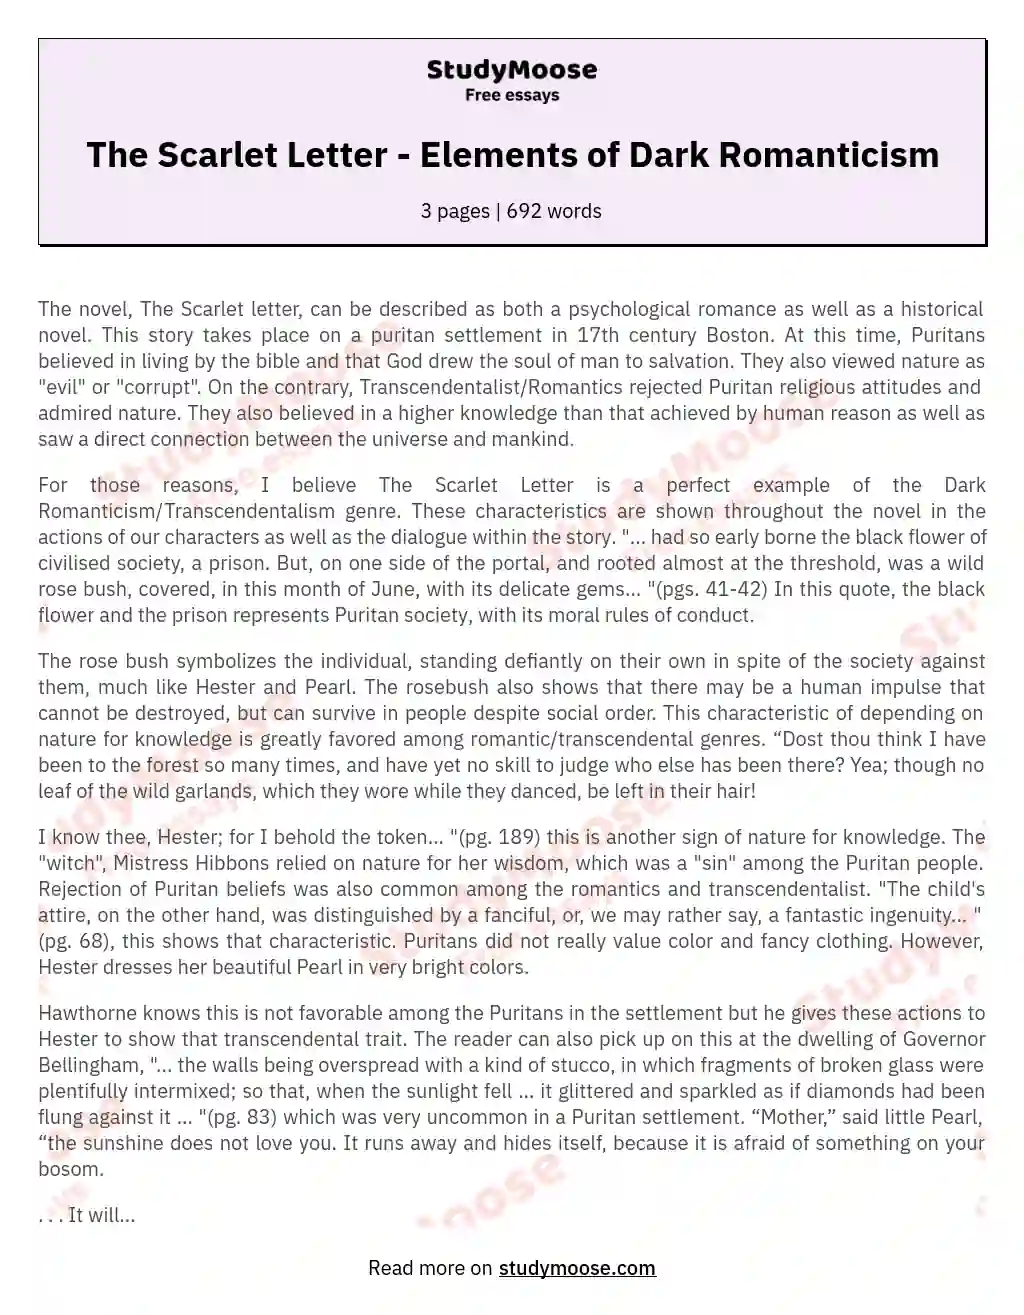 The Scarlet Letter - Elements of Dark Romanticism